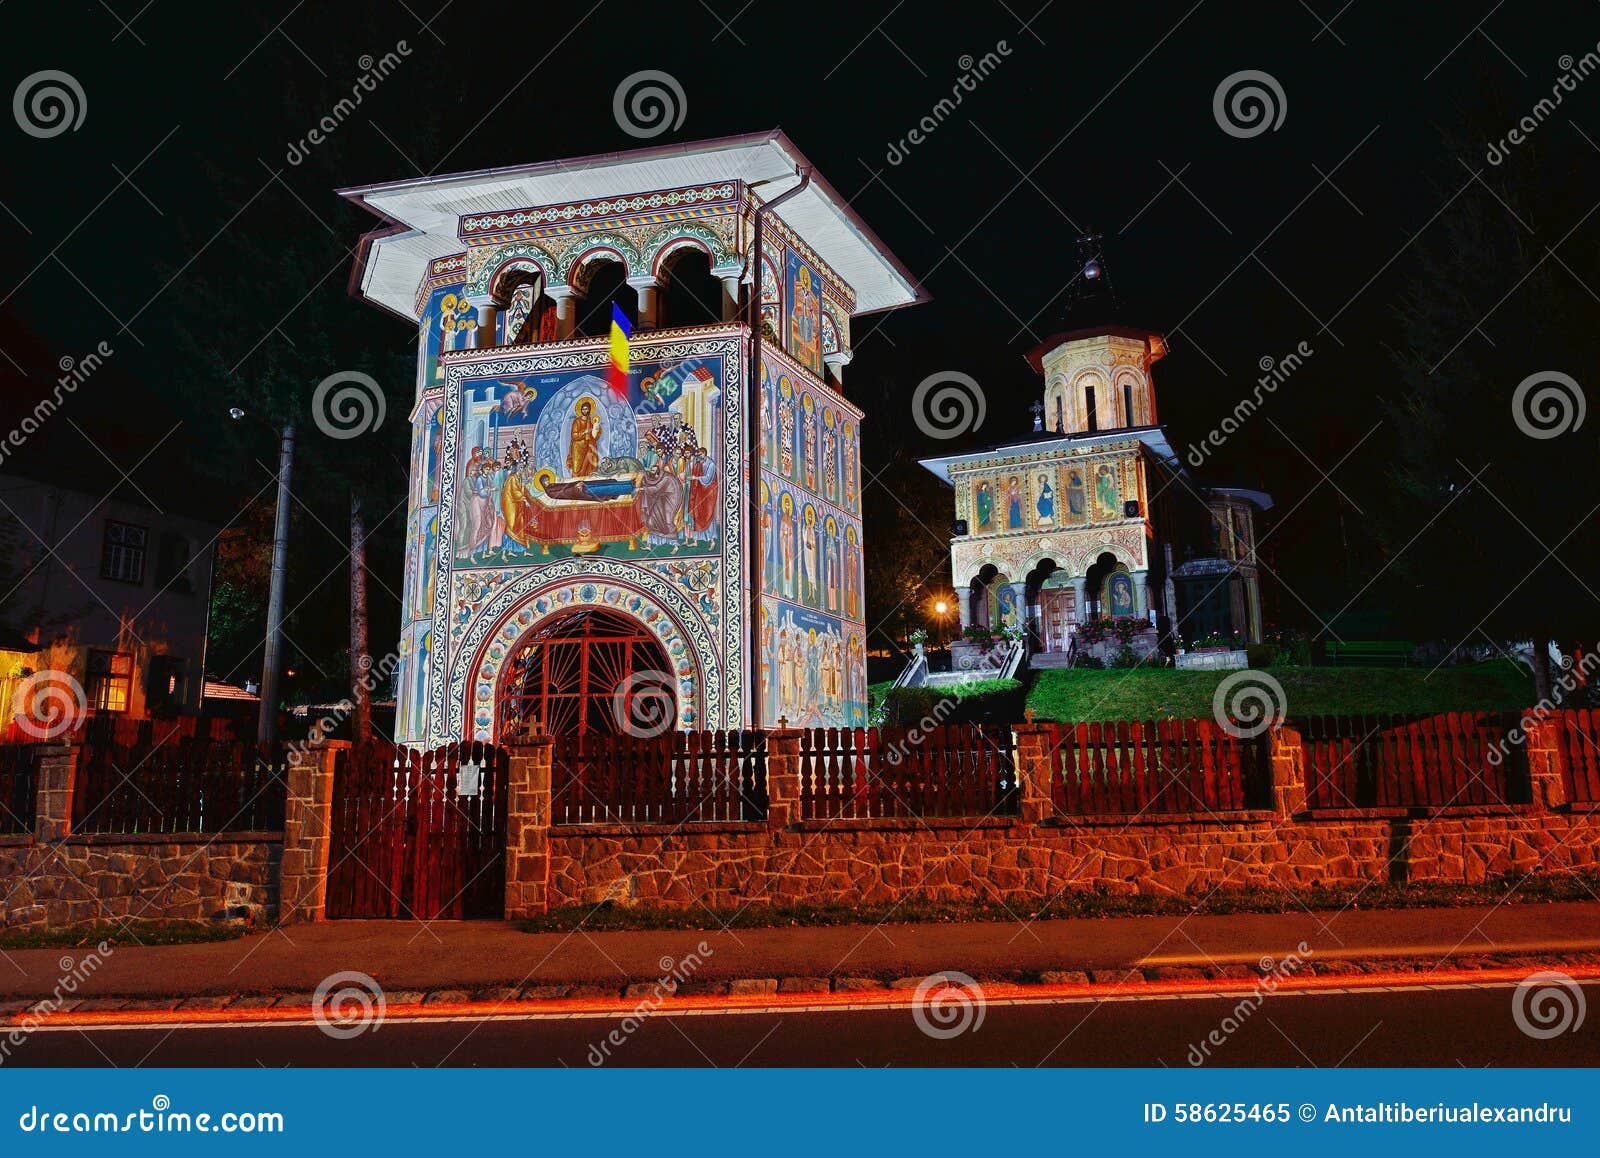 the orthodox church from baile tusnad, transylvania, romania by night.